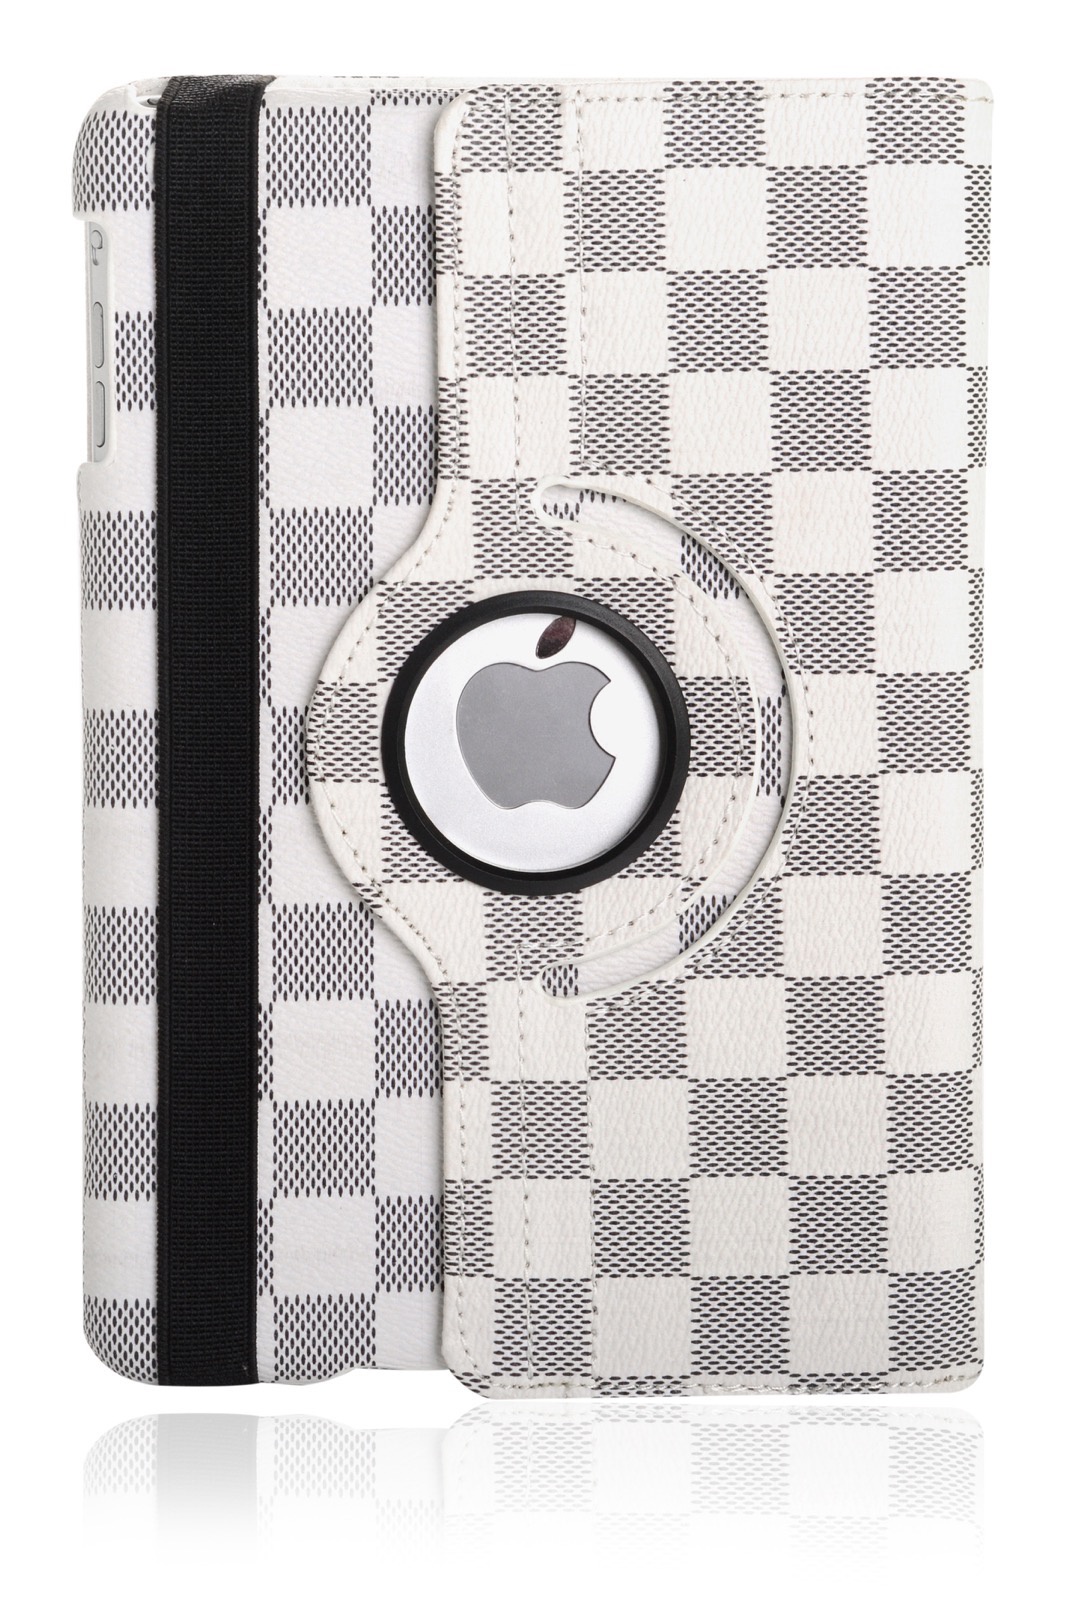 фото Чехол для планшета Gurdini книжка 410066 поворотный 360 в шашечку для Apple iPad mini 1/2/3 7.9", белый